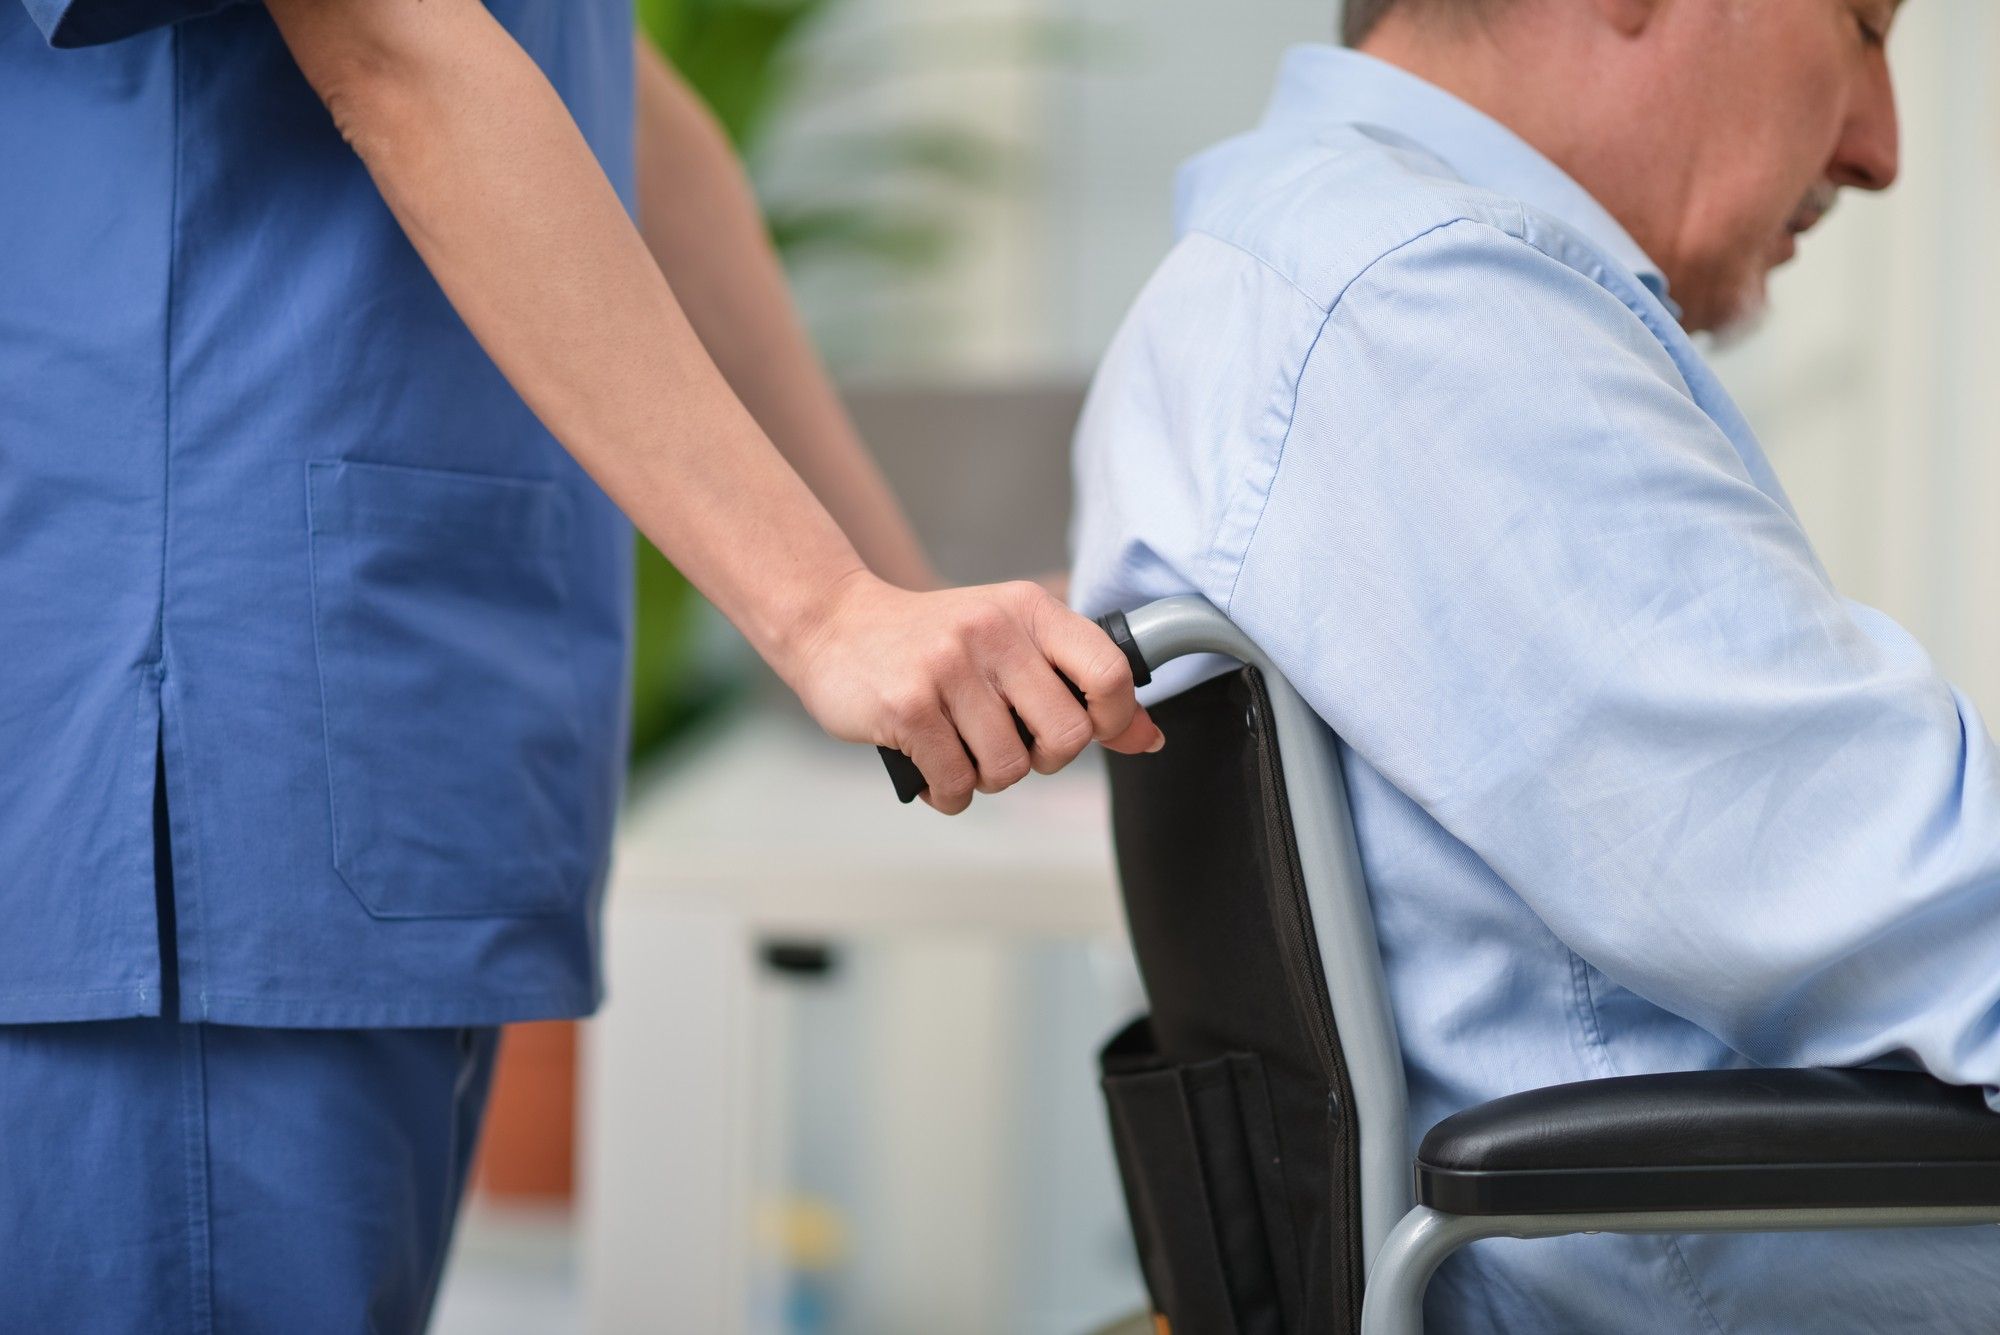 Nurse pushing senior man in wheelchair regarding the nursing home neglect lawsuit filed against Southbridge Care Homes